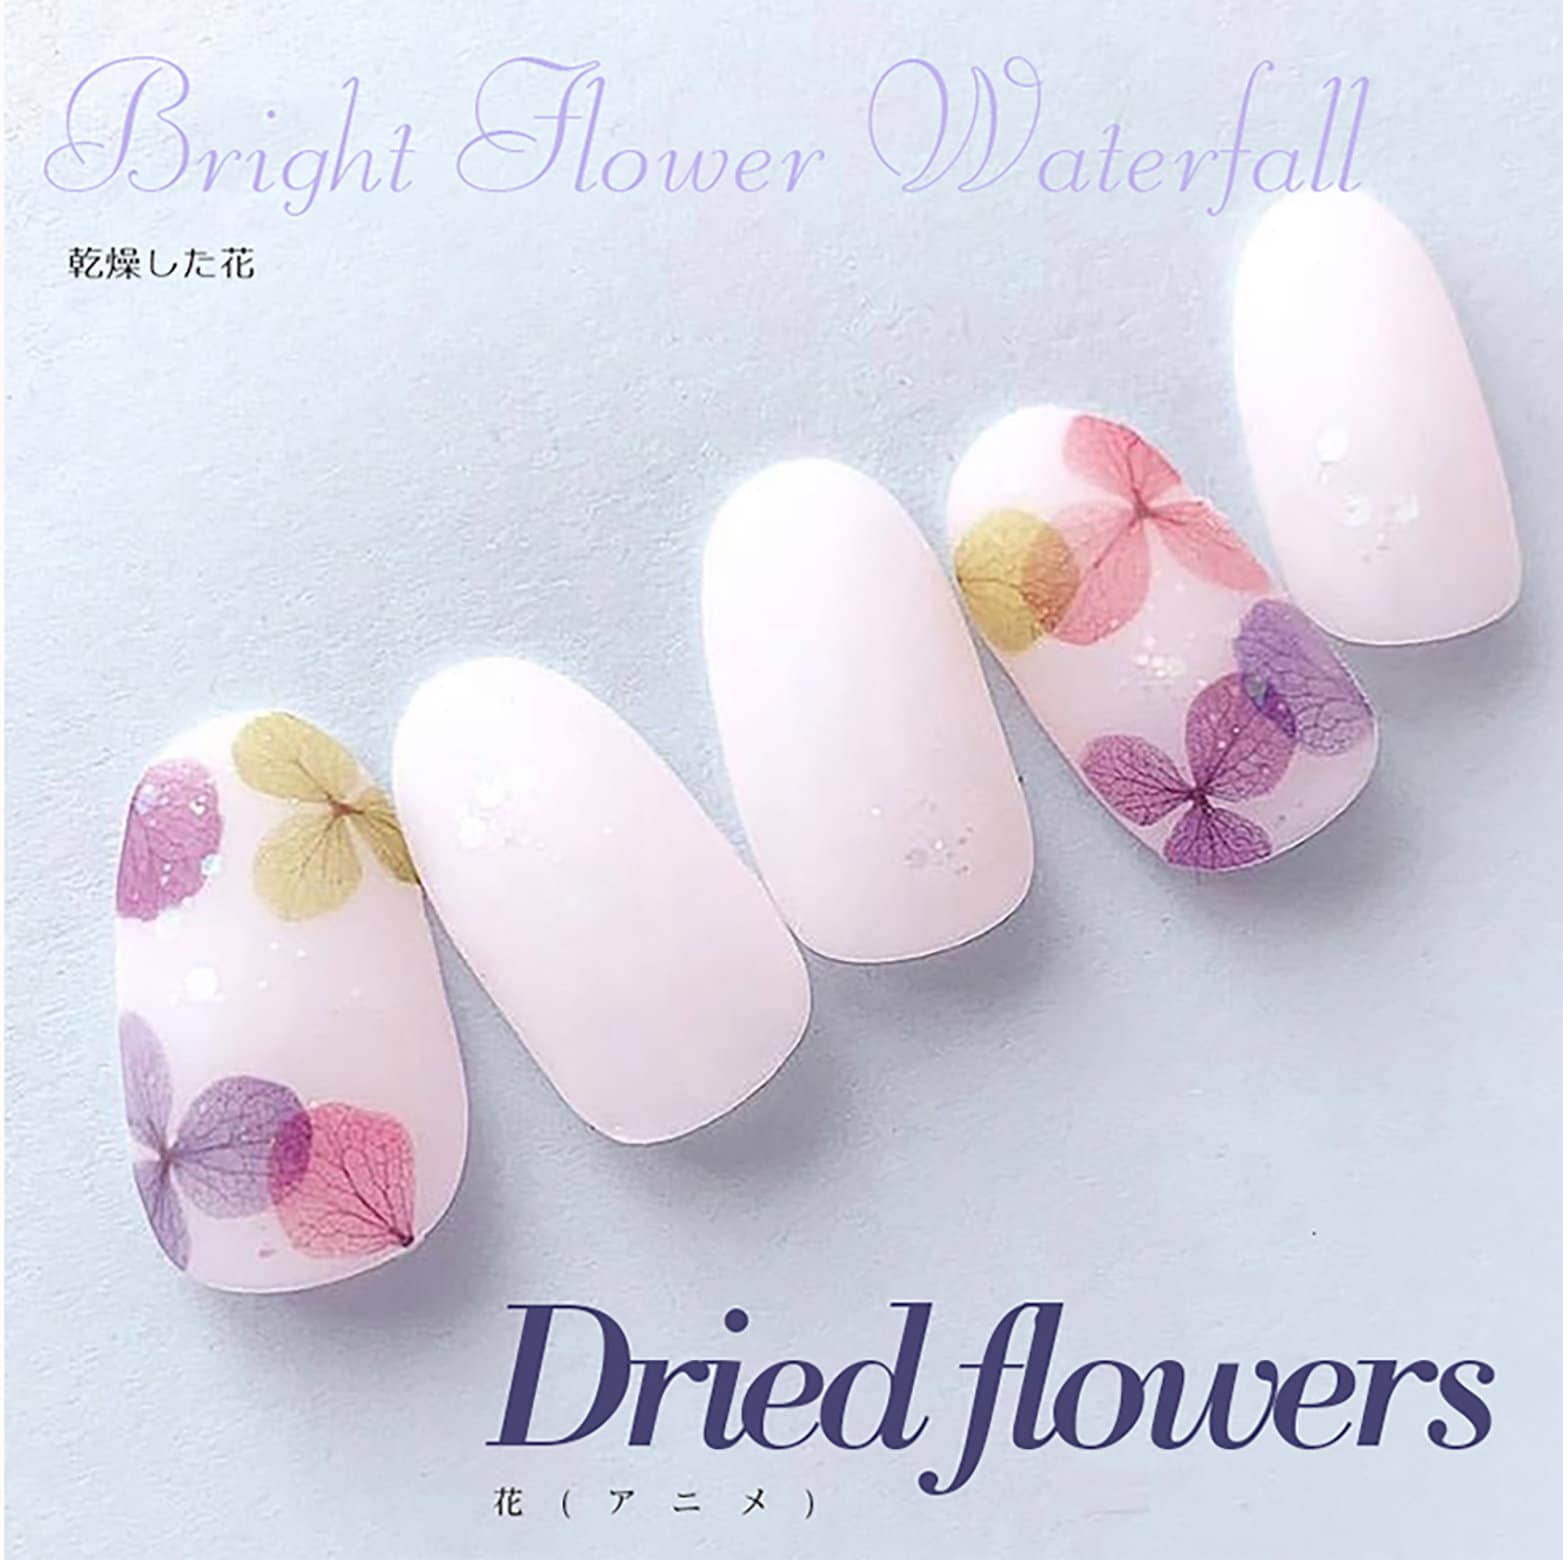 Hydrangea flower Nail Art Sticker/ Emulational flower DIY Tips Guides Transfer Stickers/peel off hydrangea Sticker/ flower manicure stencil